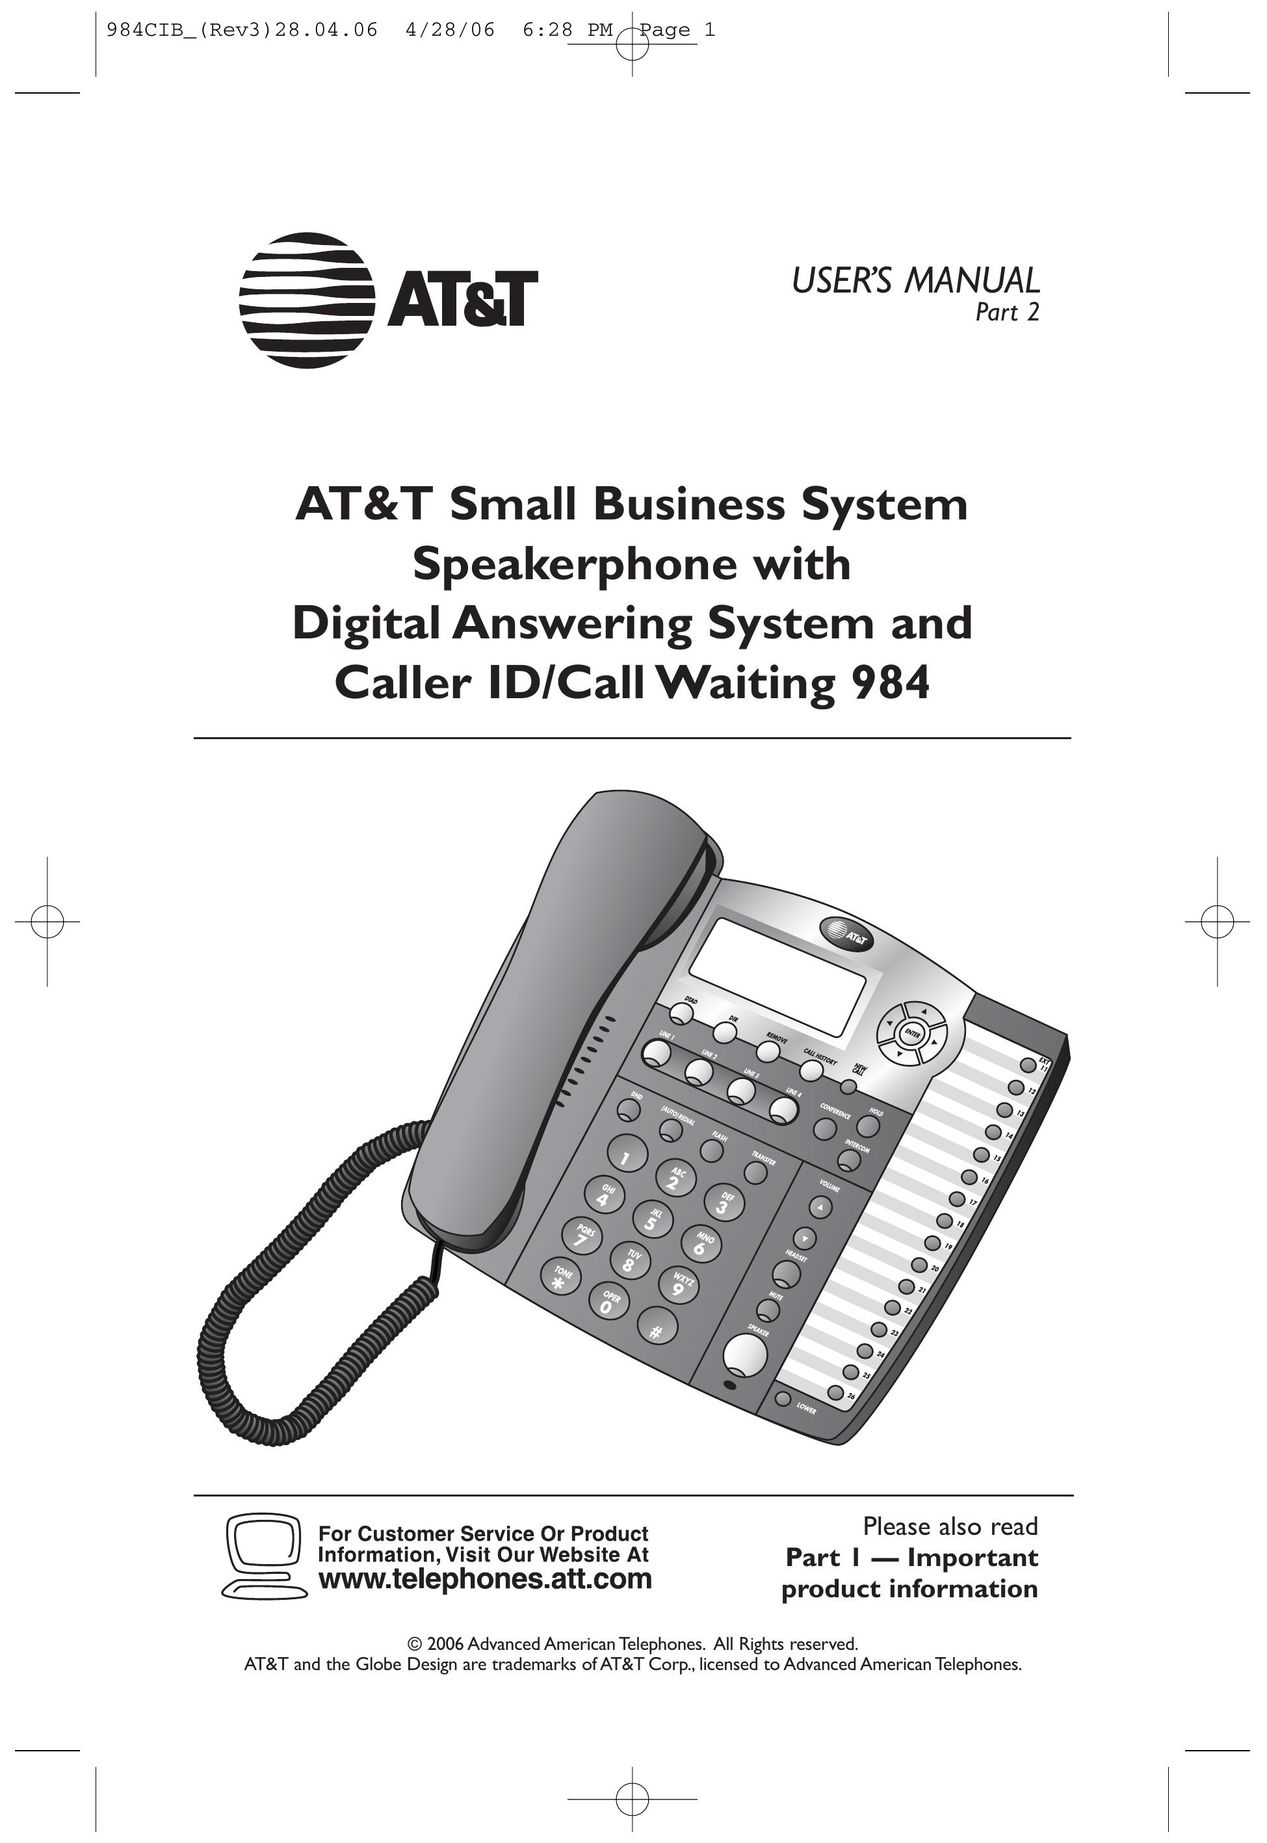 AT&T 984 Answering Machine User Manual